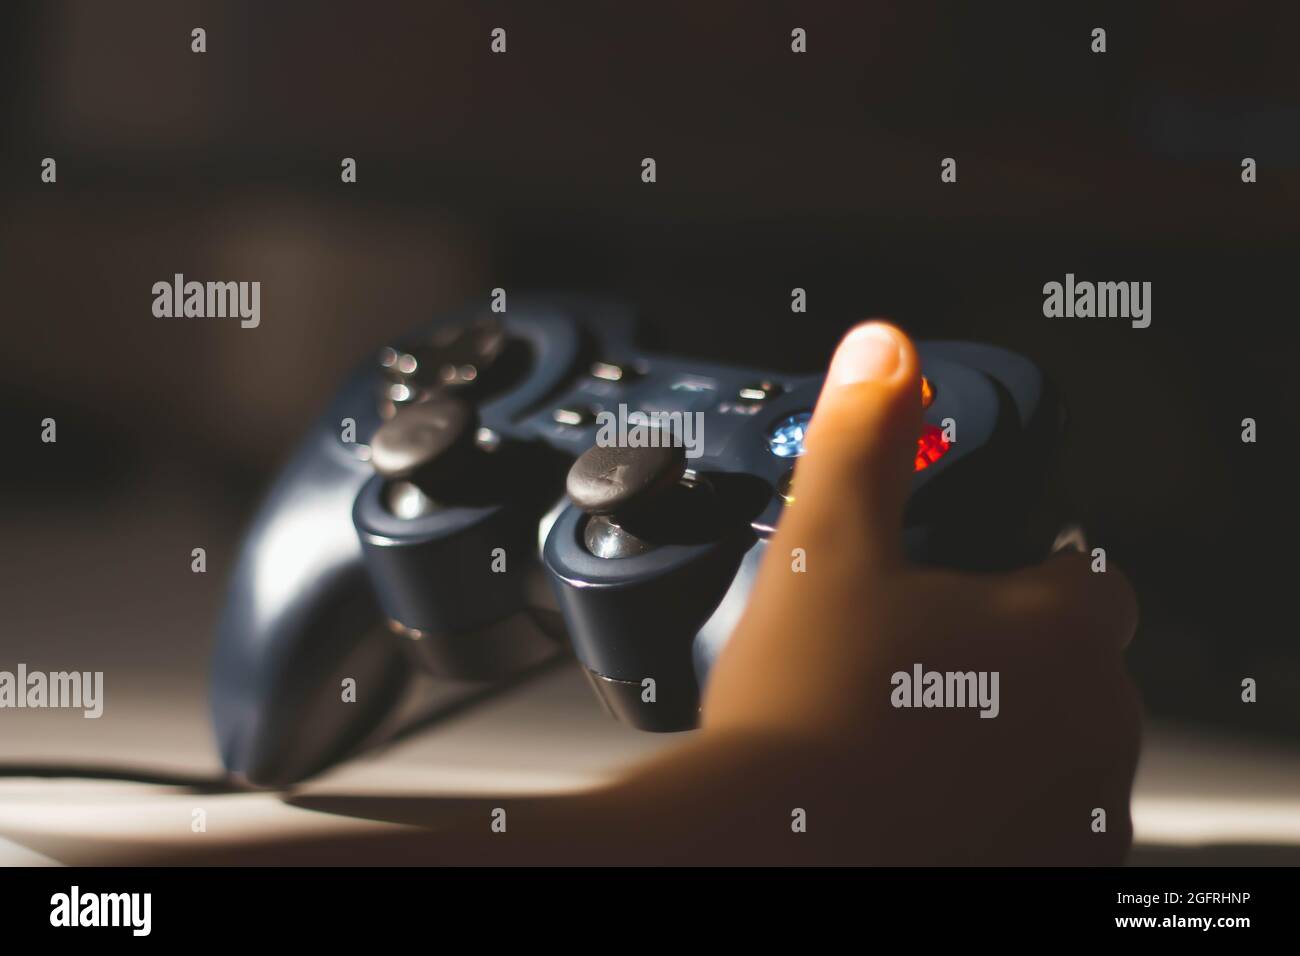 Gamer Playing Online Game Joystick Controller Stock Photo 2216745003